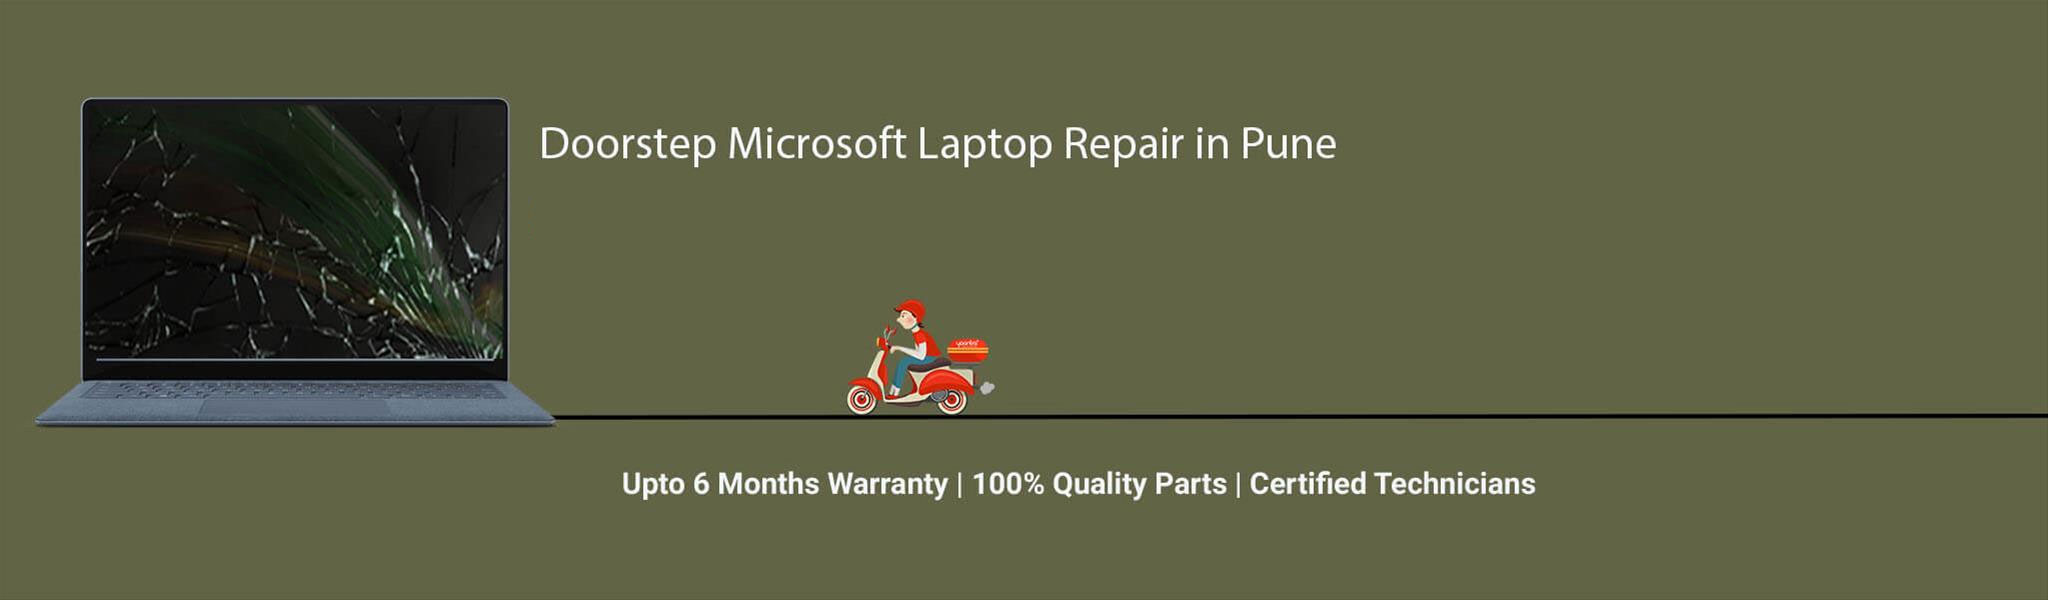 Microsoft-laptop-banner-pune.jpg